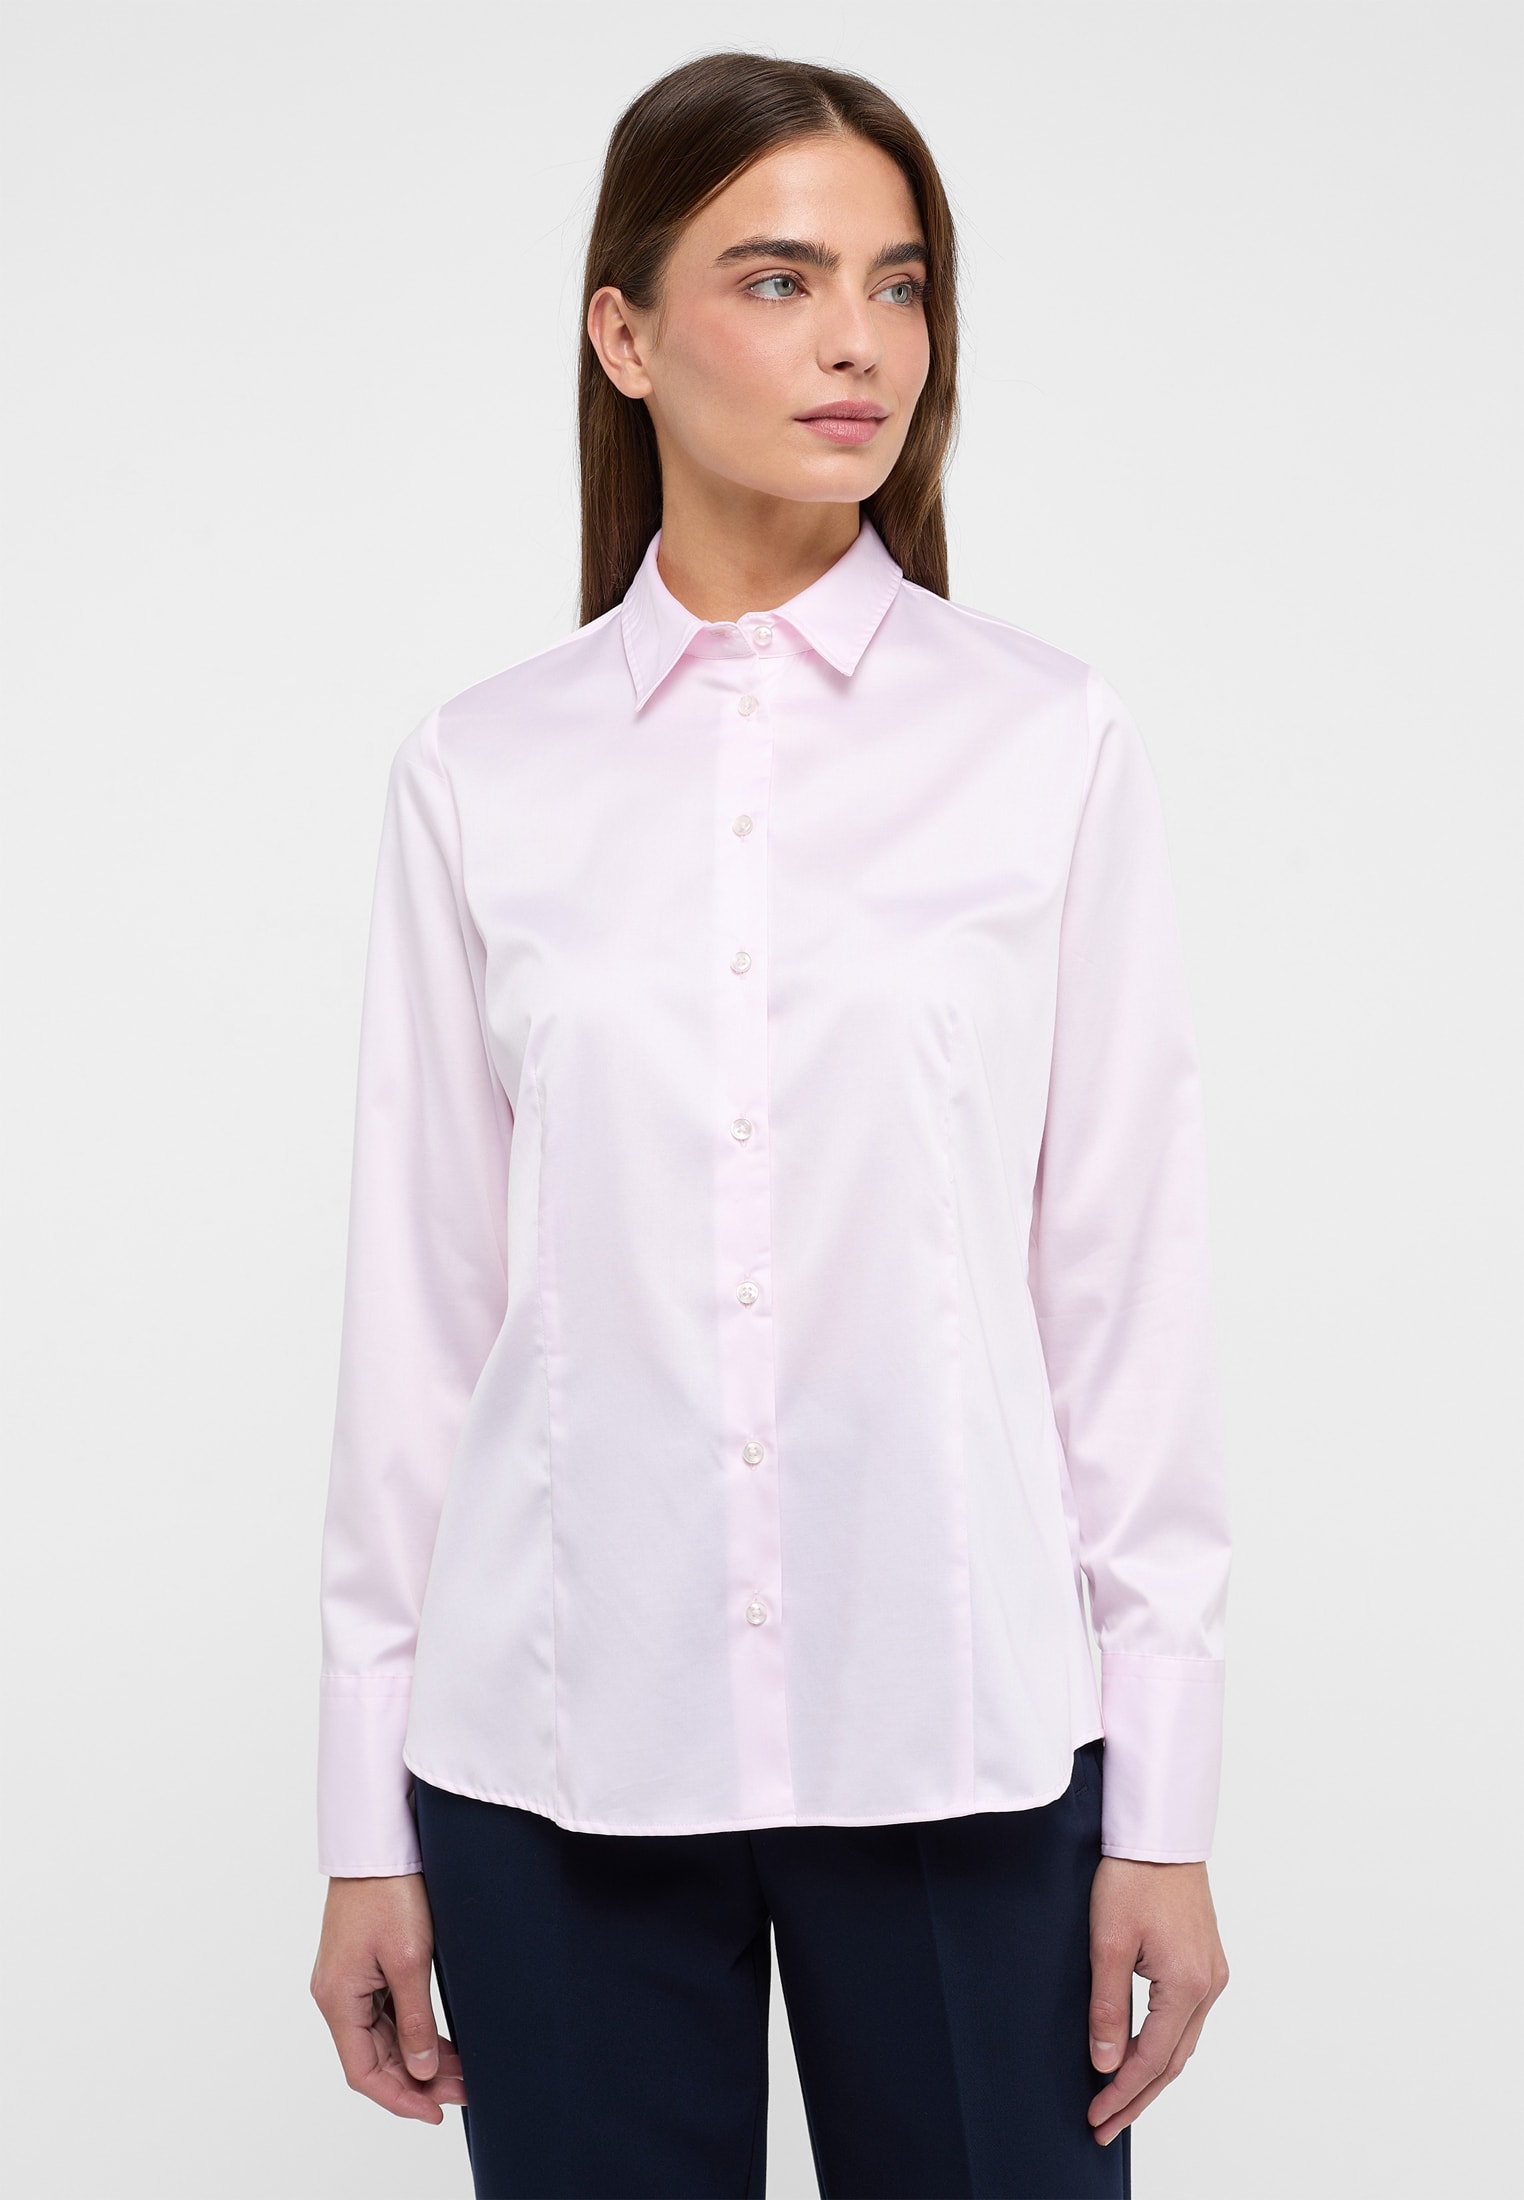 | | in Shirt | | Bluse rosa 44 2BL00399-15-11-44-1/1 Langarm rosa unifarben Satin